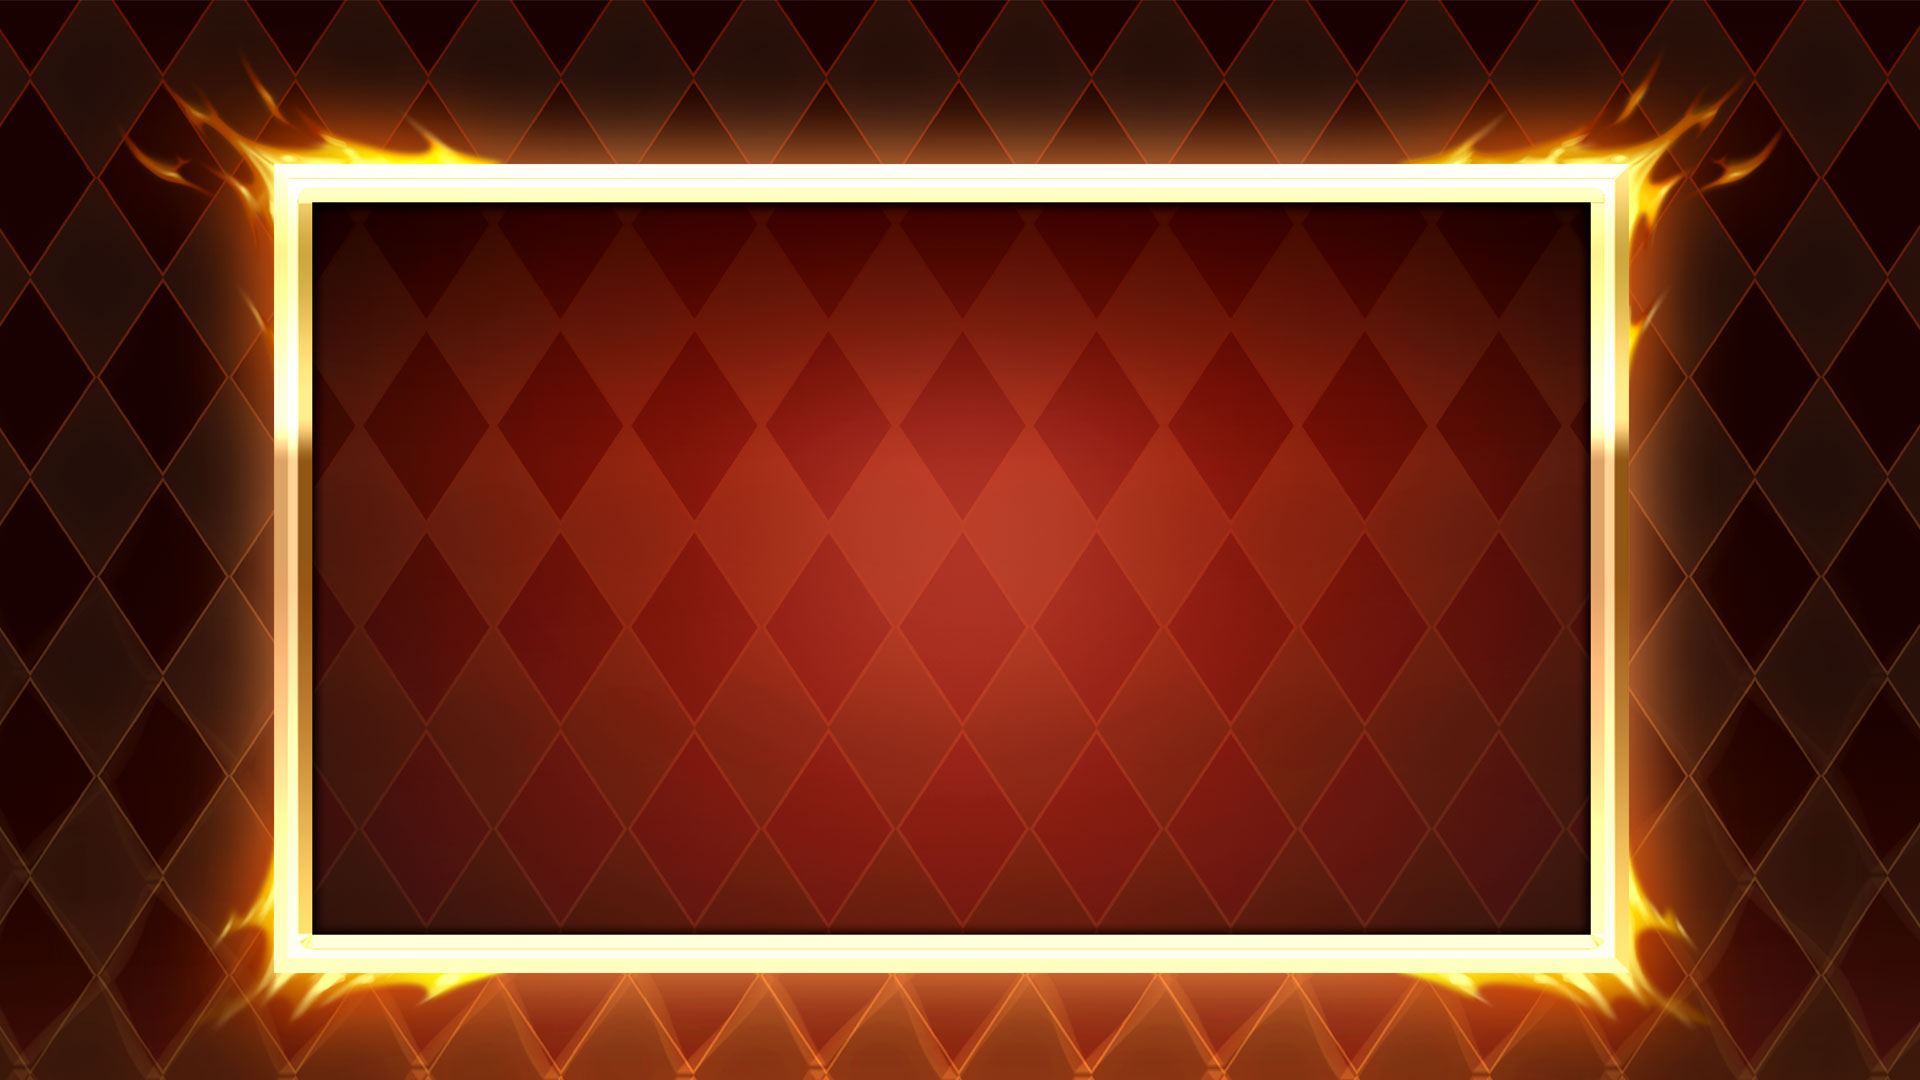 Game hight resolution background Fire Joker